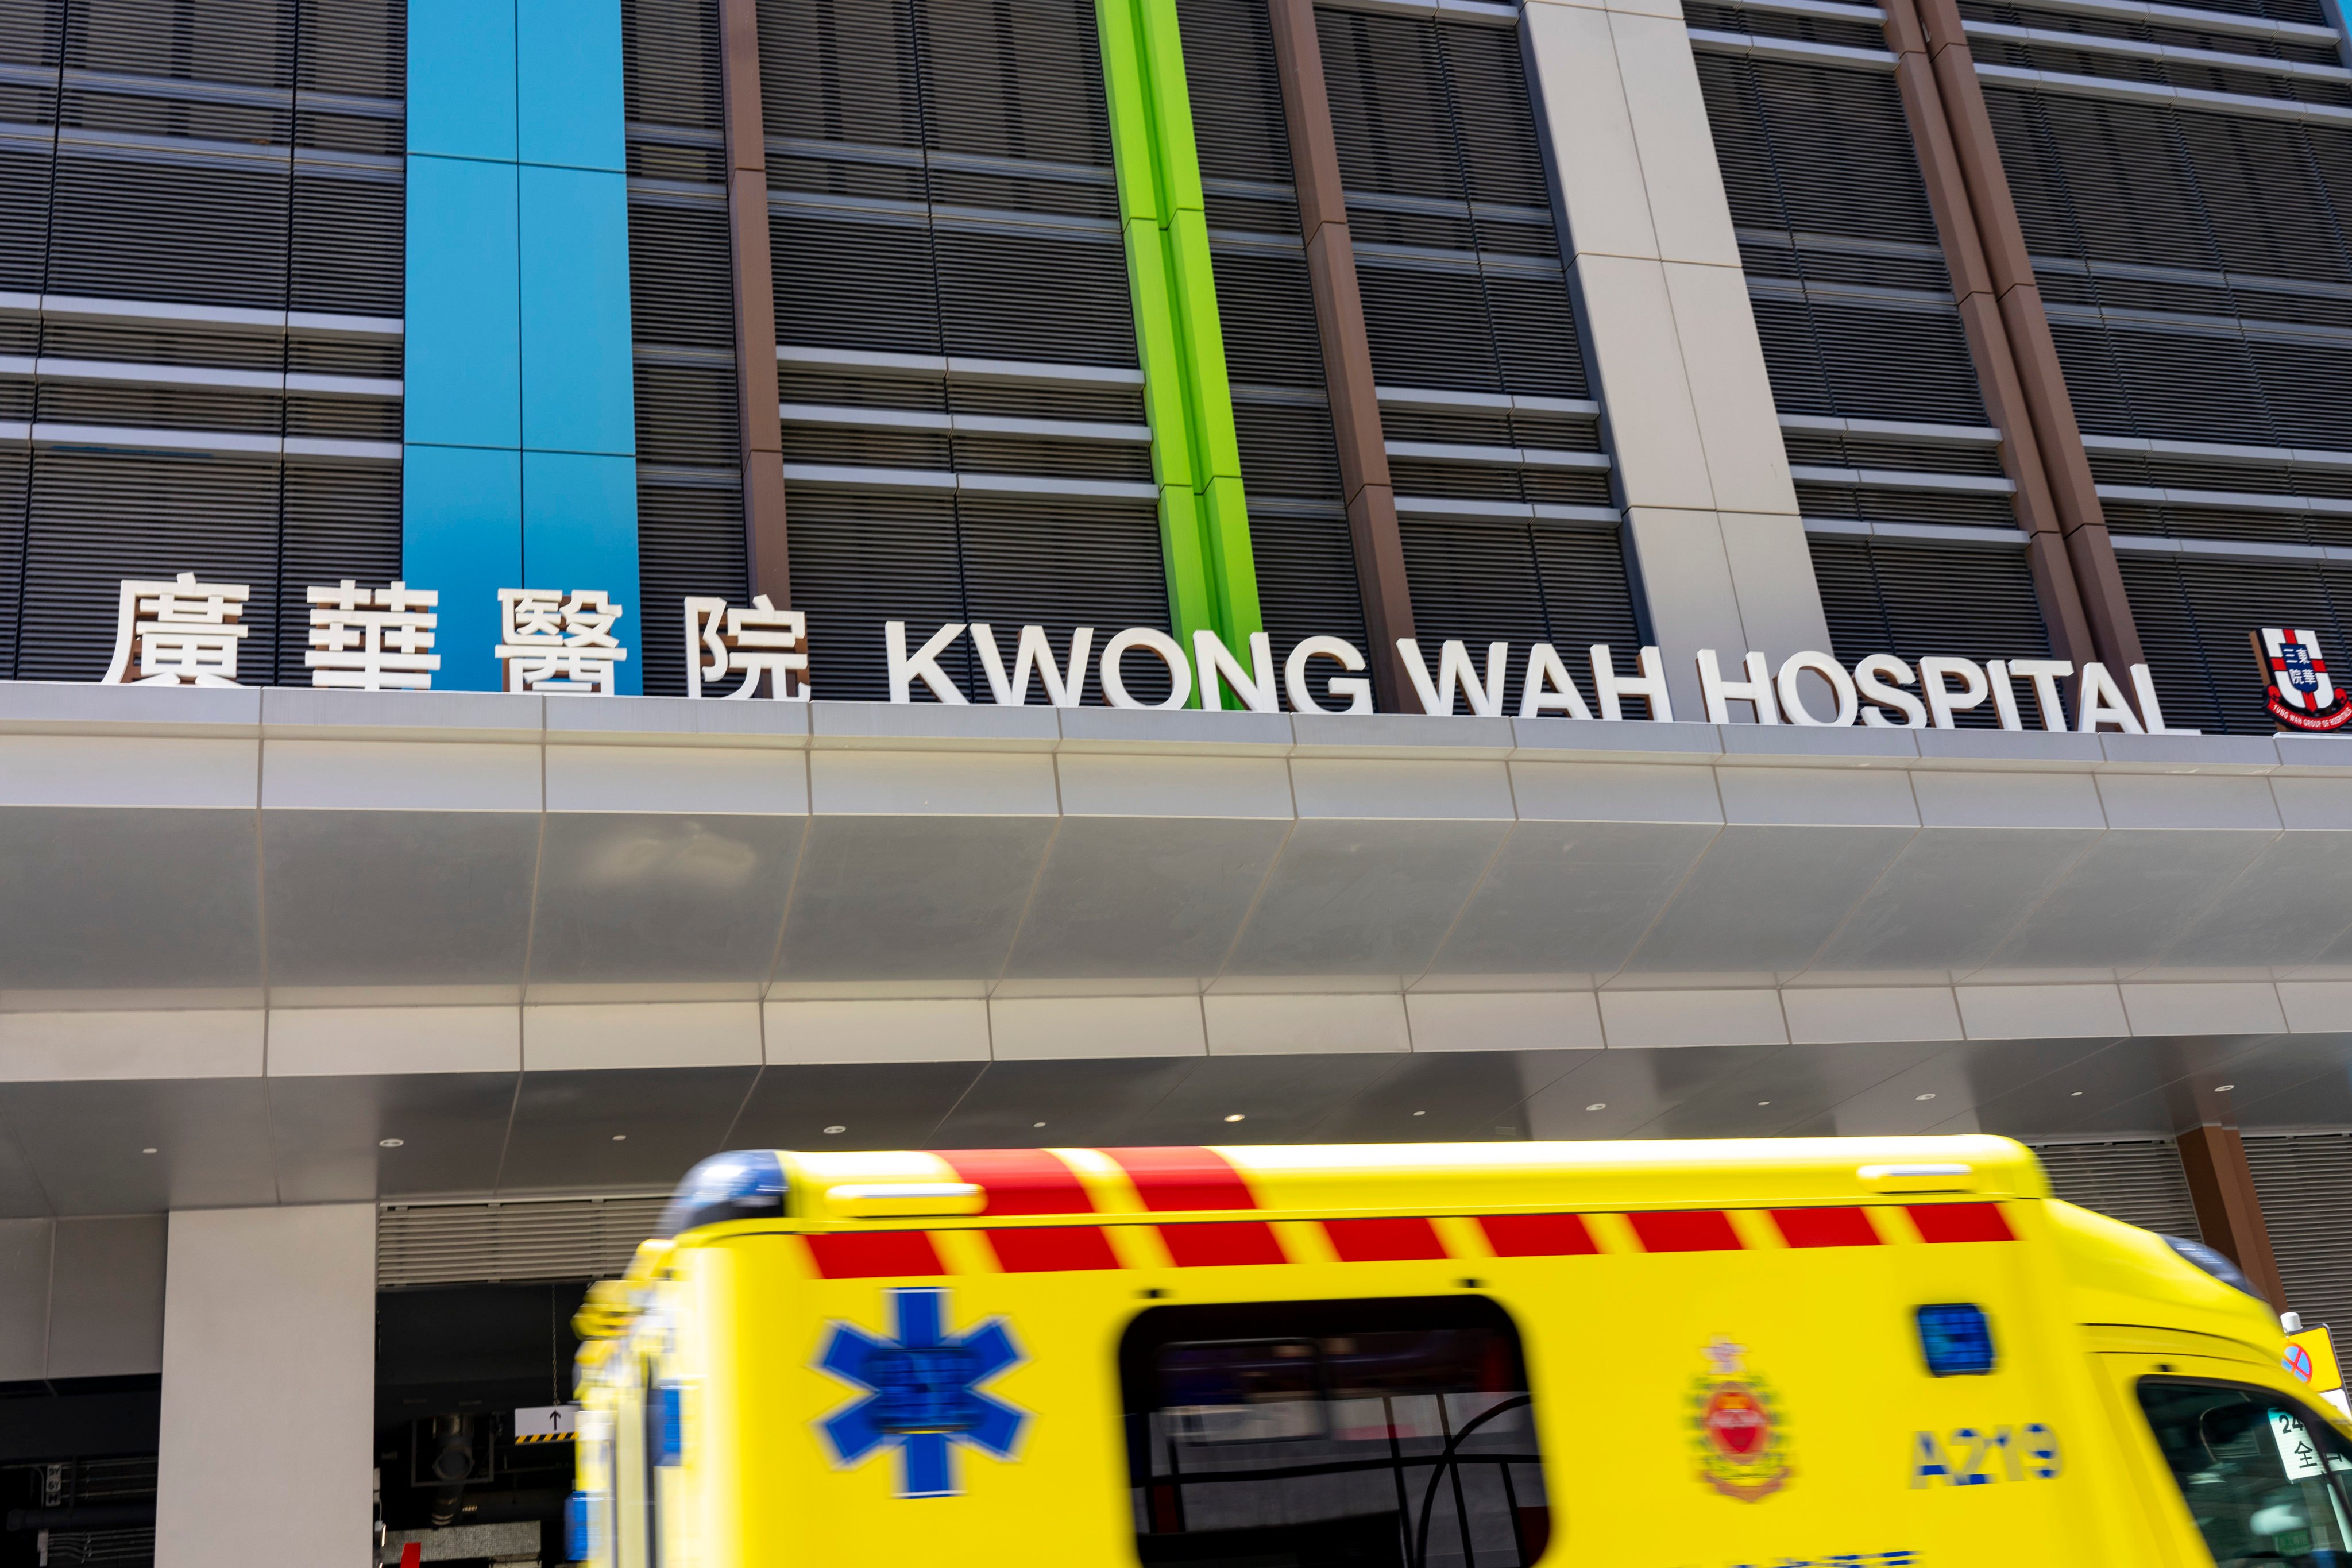 The infant was taken to Kwong Wah Hospital in Yau Ma Tei before he died. Photo: Warton Li